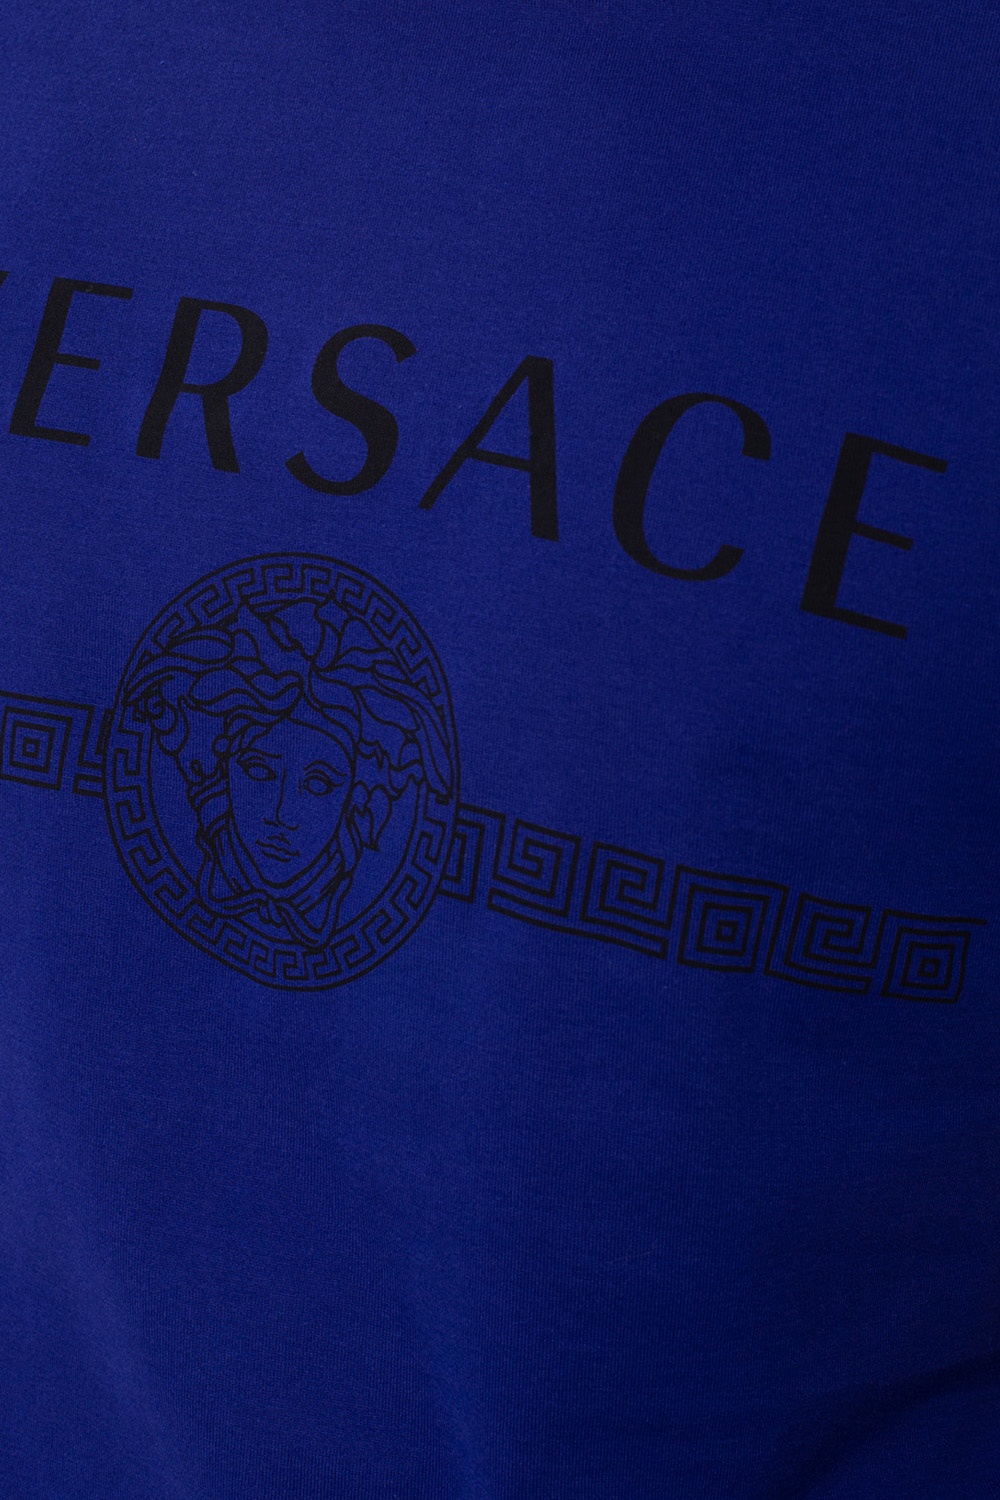 Men's Clothing, Versace Sapato Polo shirt with logo, IetpShops